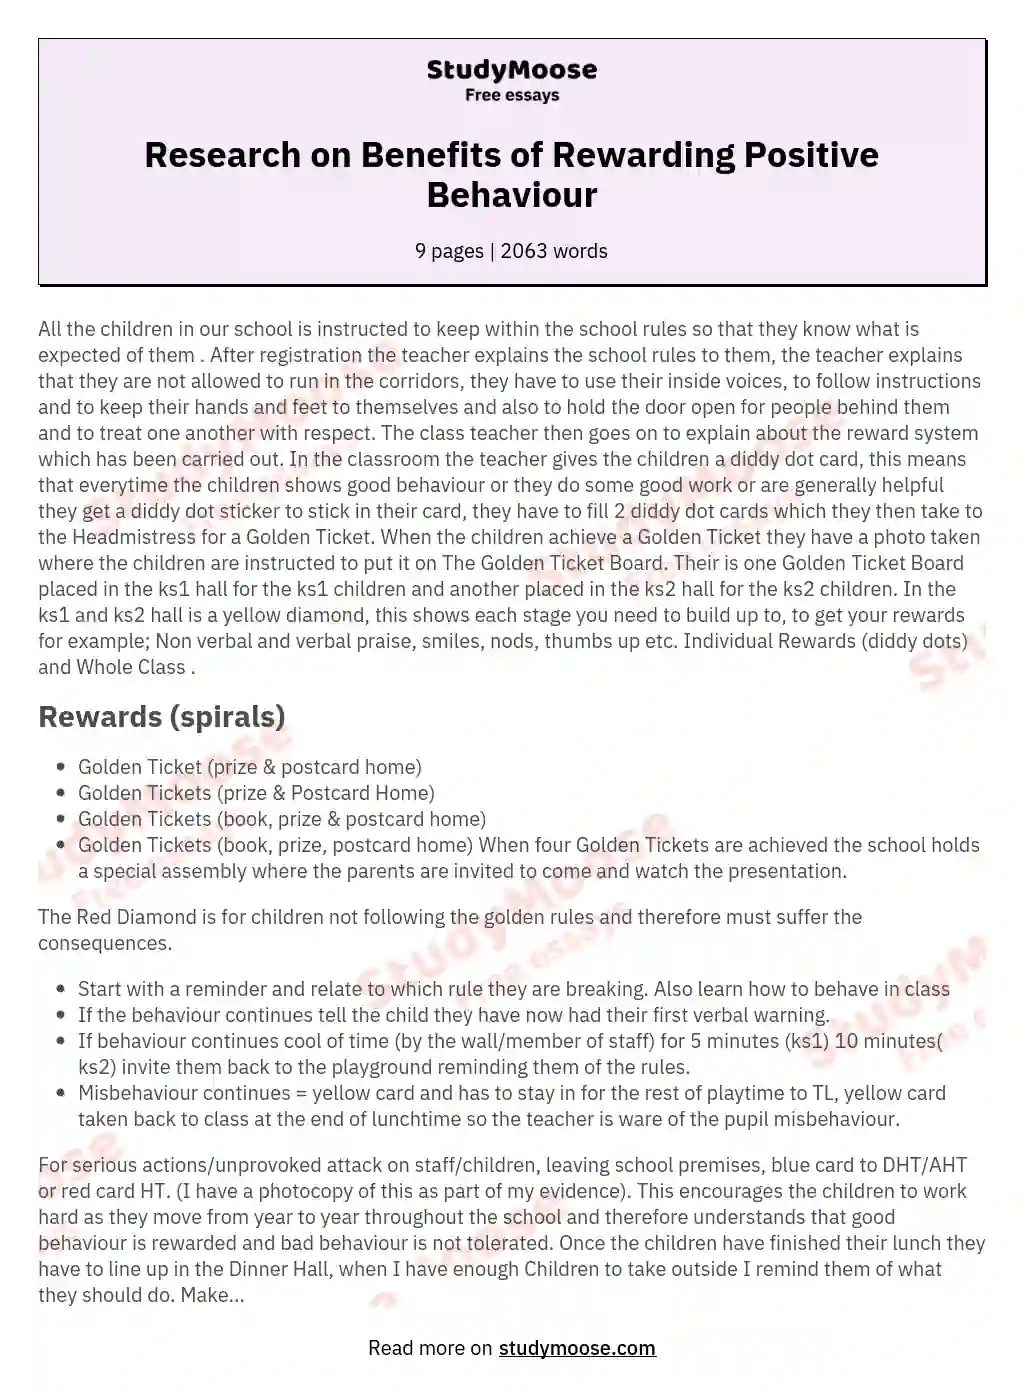 Research on Benefits of Rewarding Positive Behaviour essay